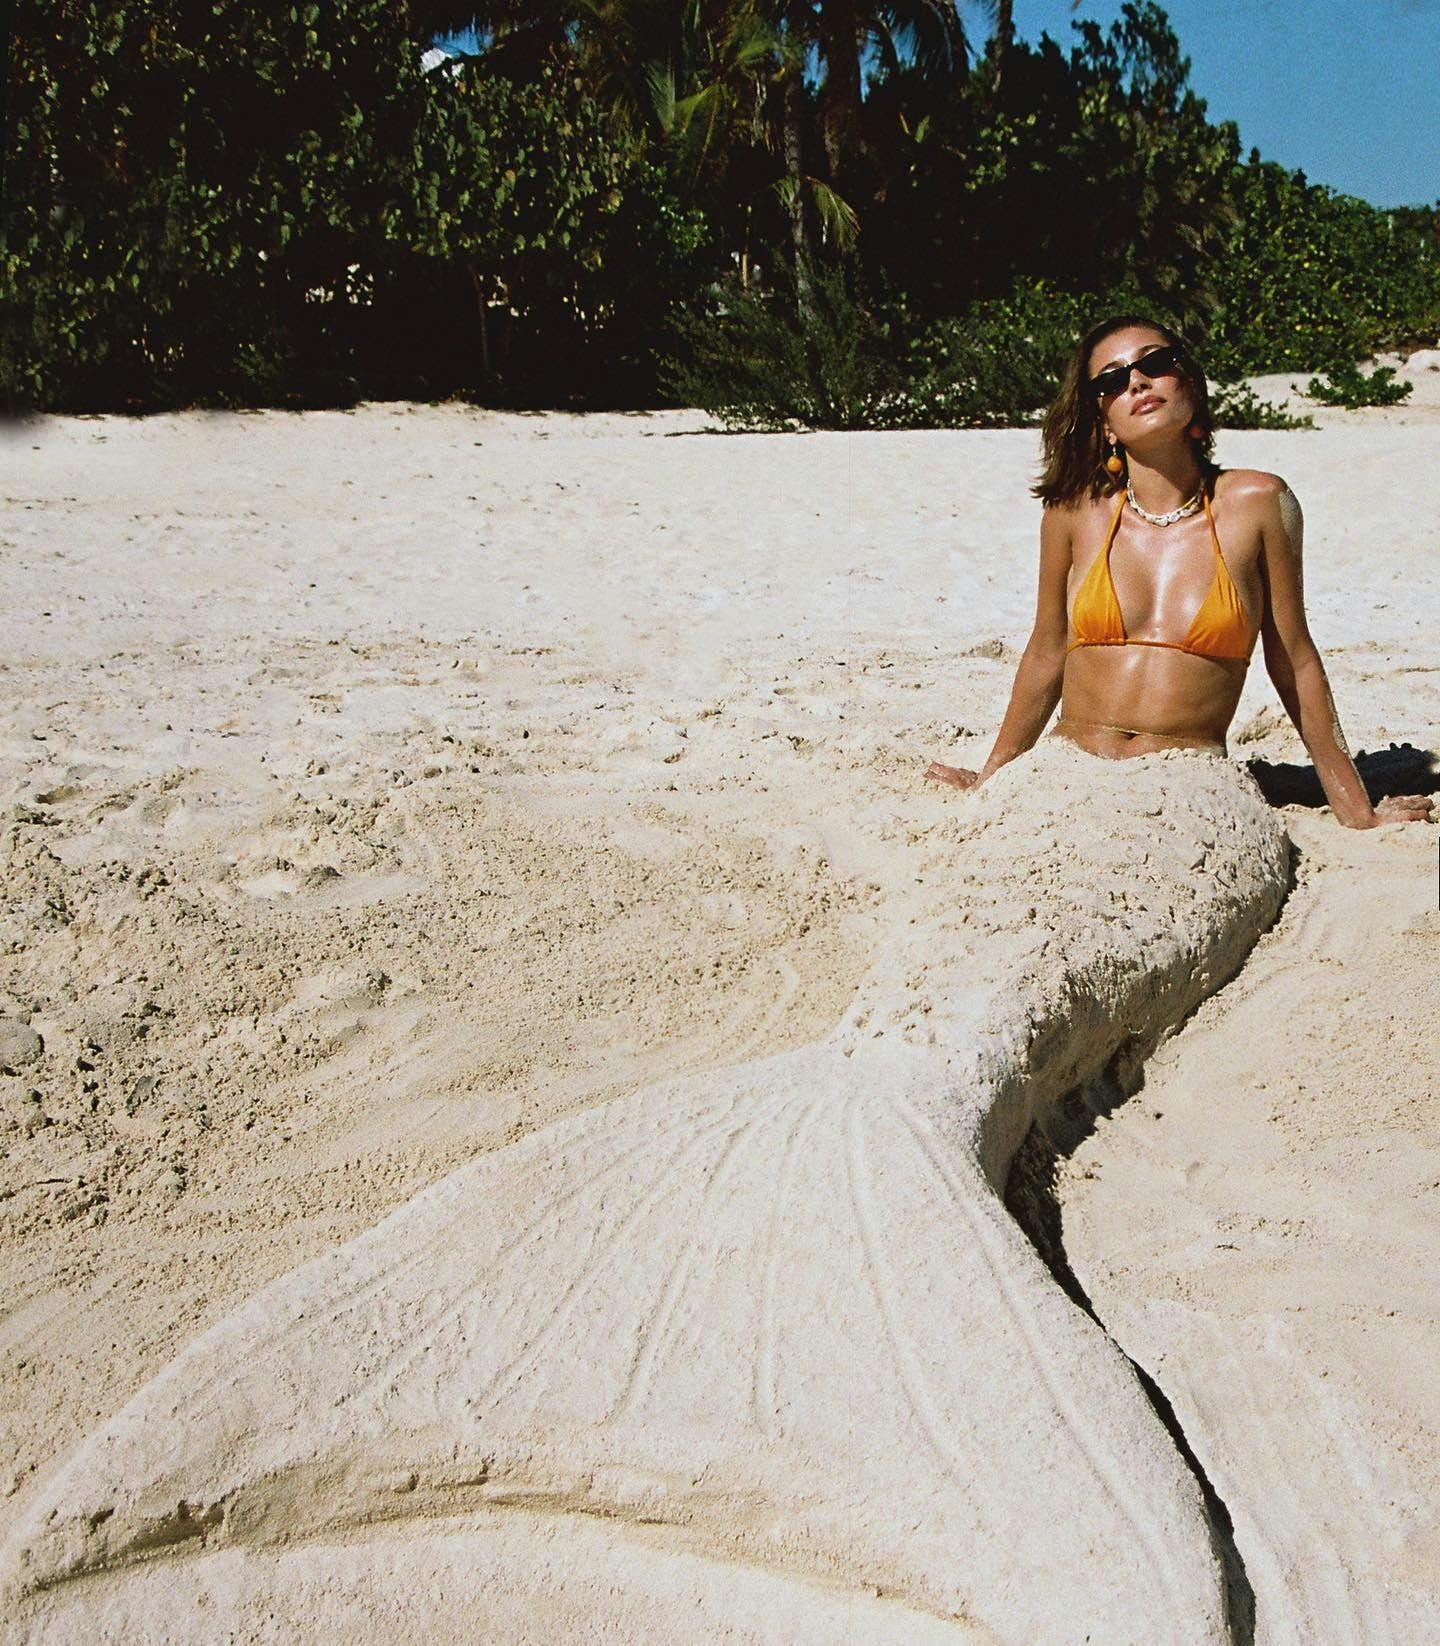 Hailey Bieber channels her inner mermaid in flaming orange bikini.